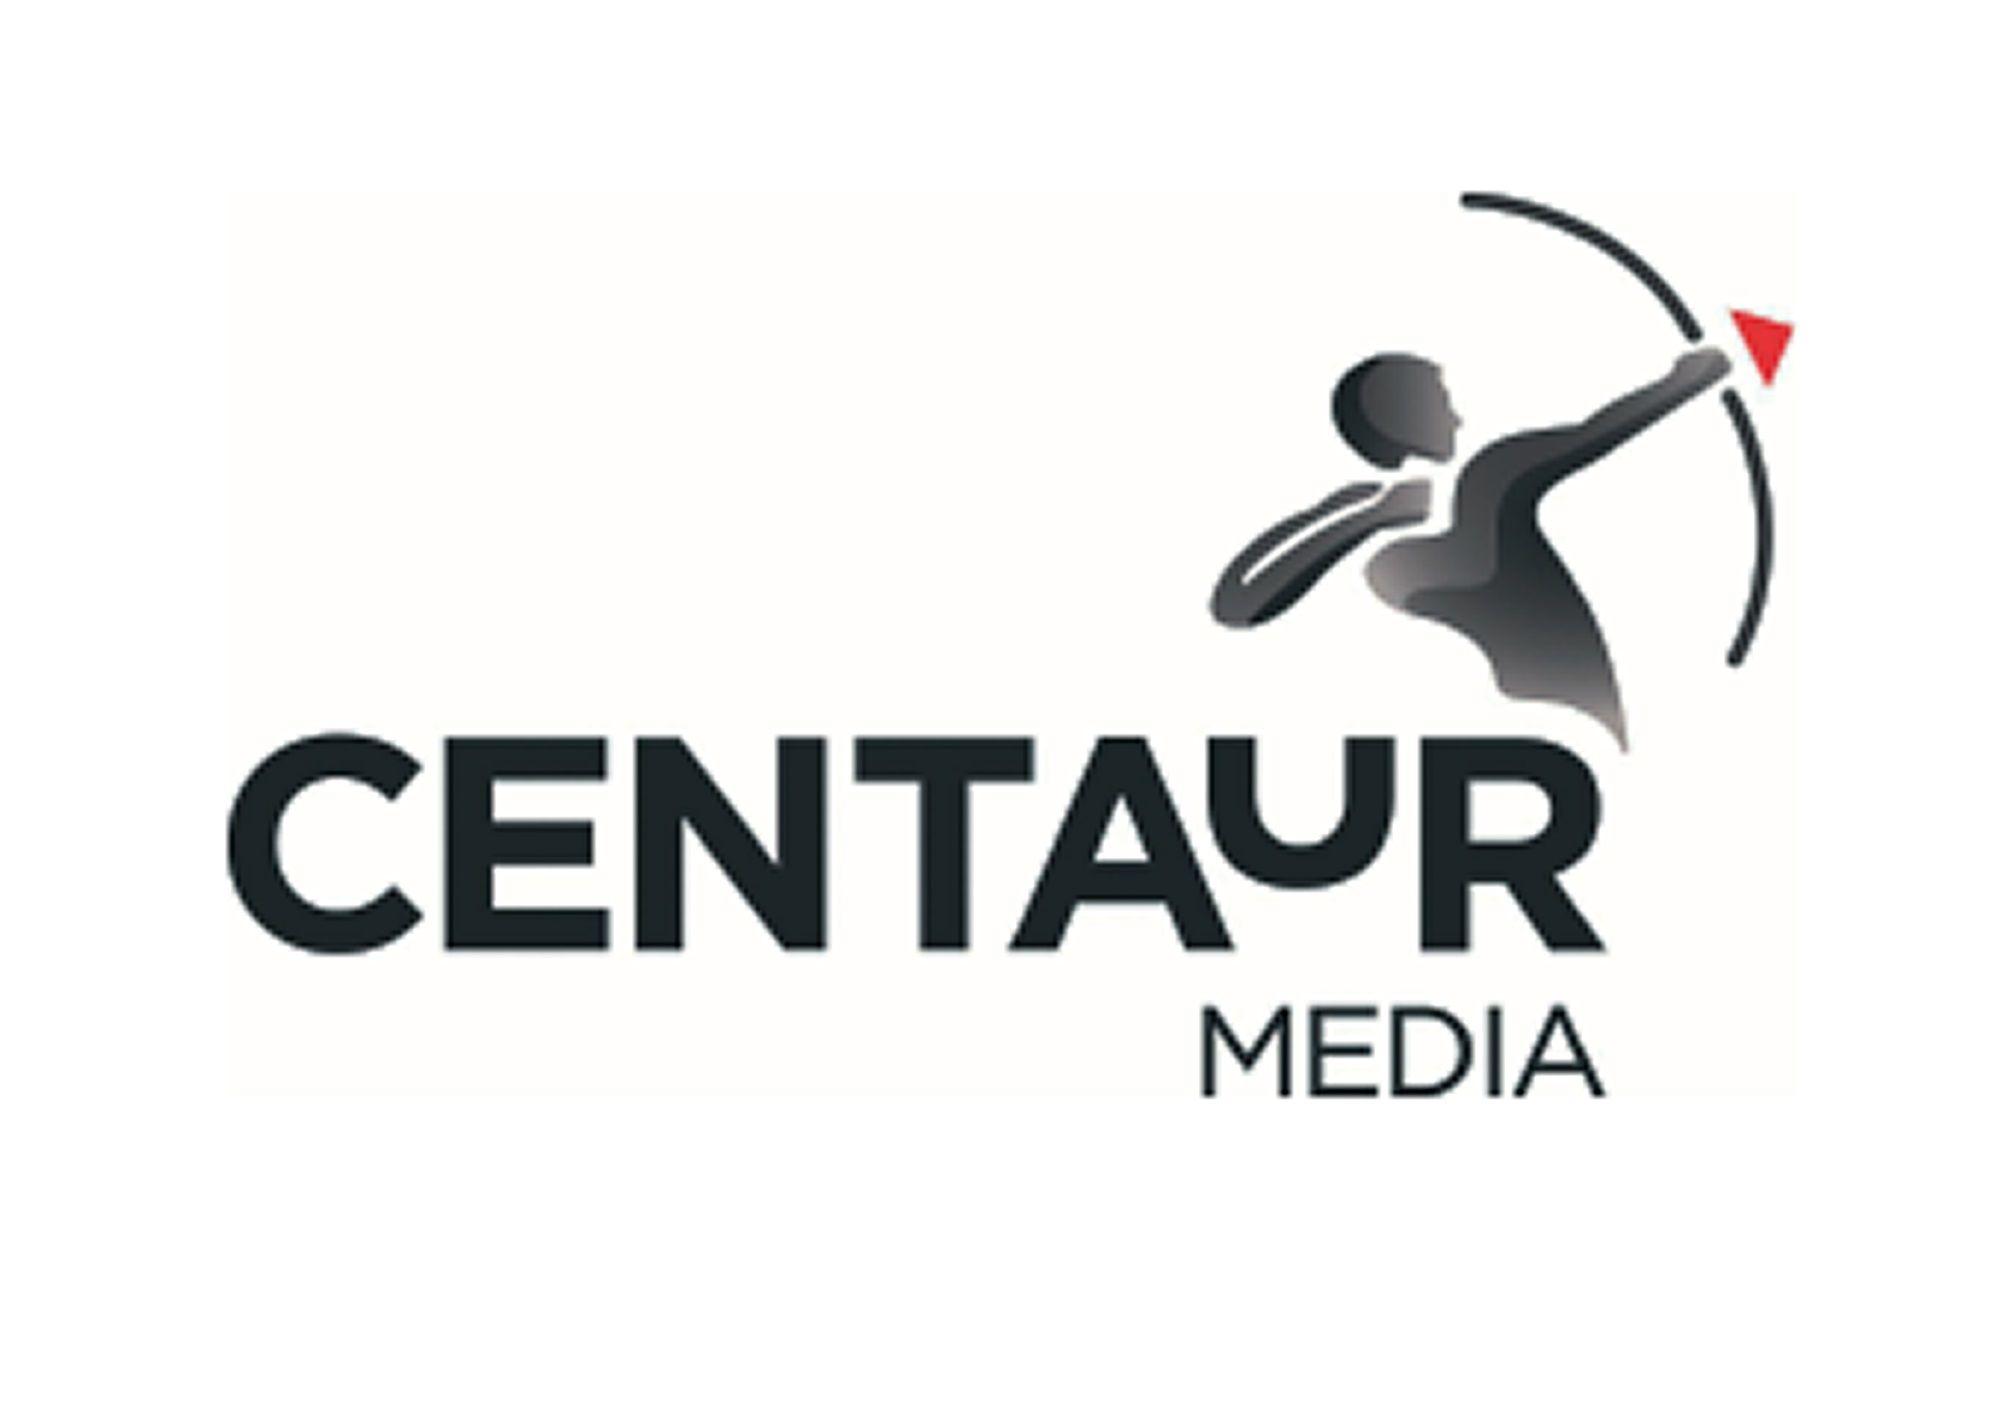 Centaur Logo - Circulation management and marketing for Centaur | Blog | Abacus